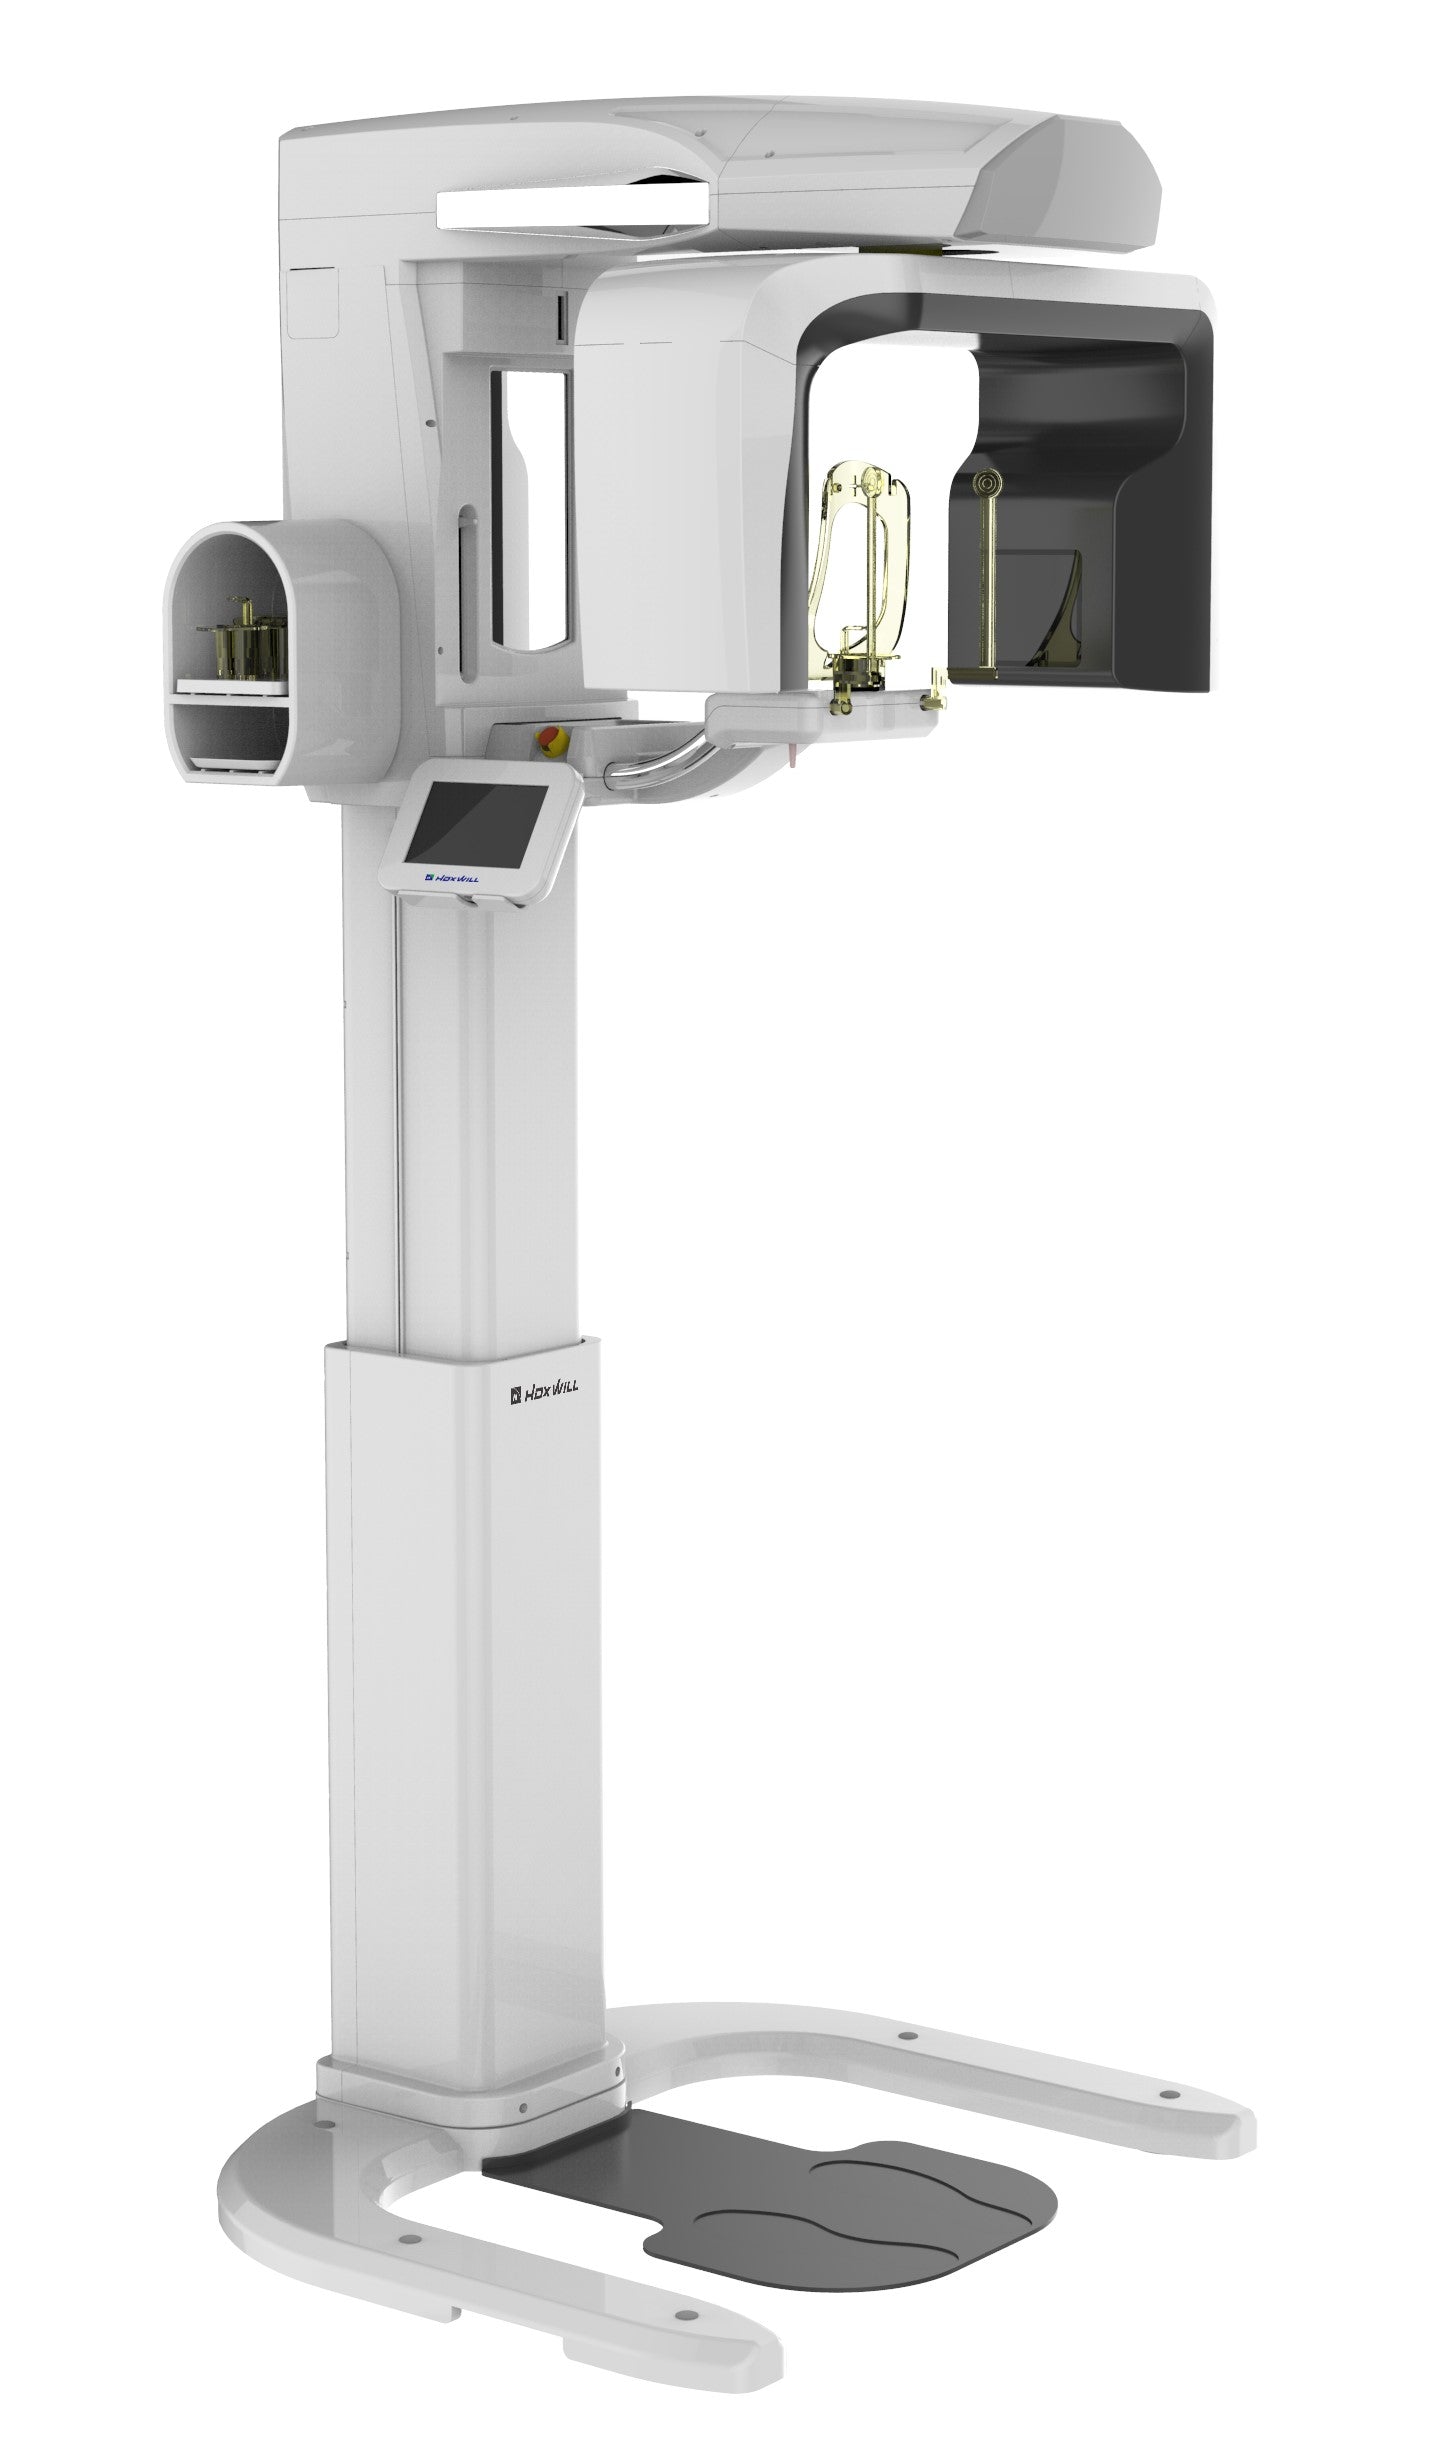 Eco-x AI 16x9 DVT-Röntgensystem mit Künstlicher Intelligenz